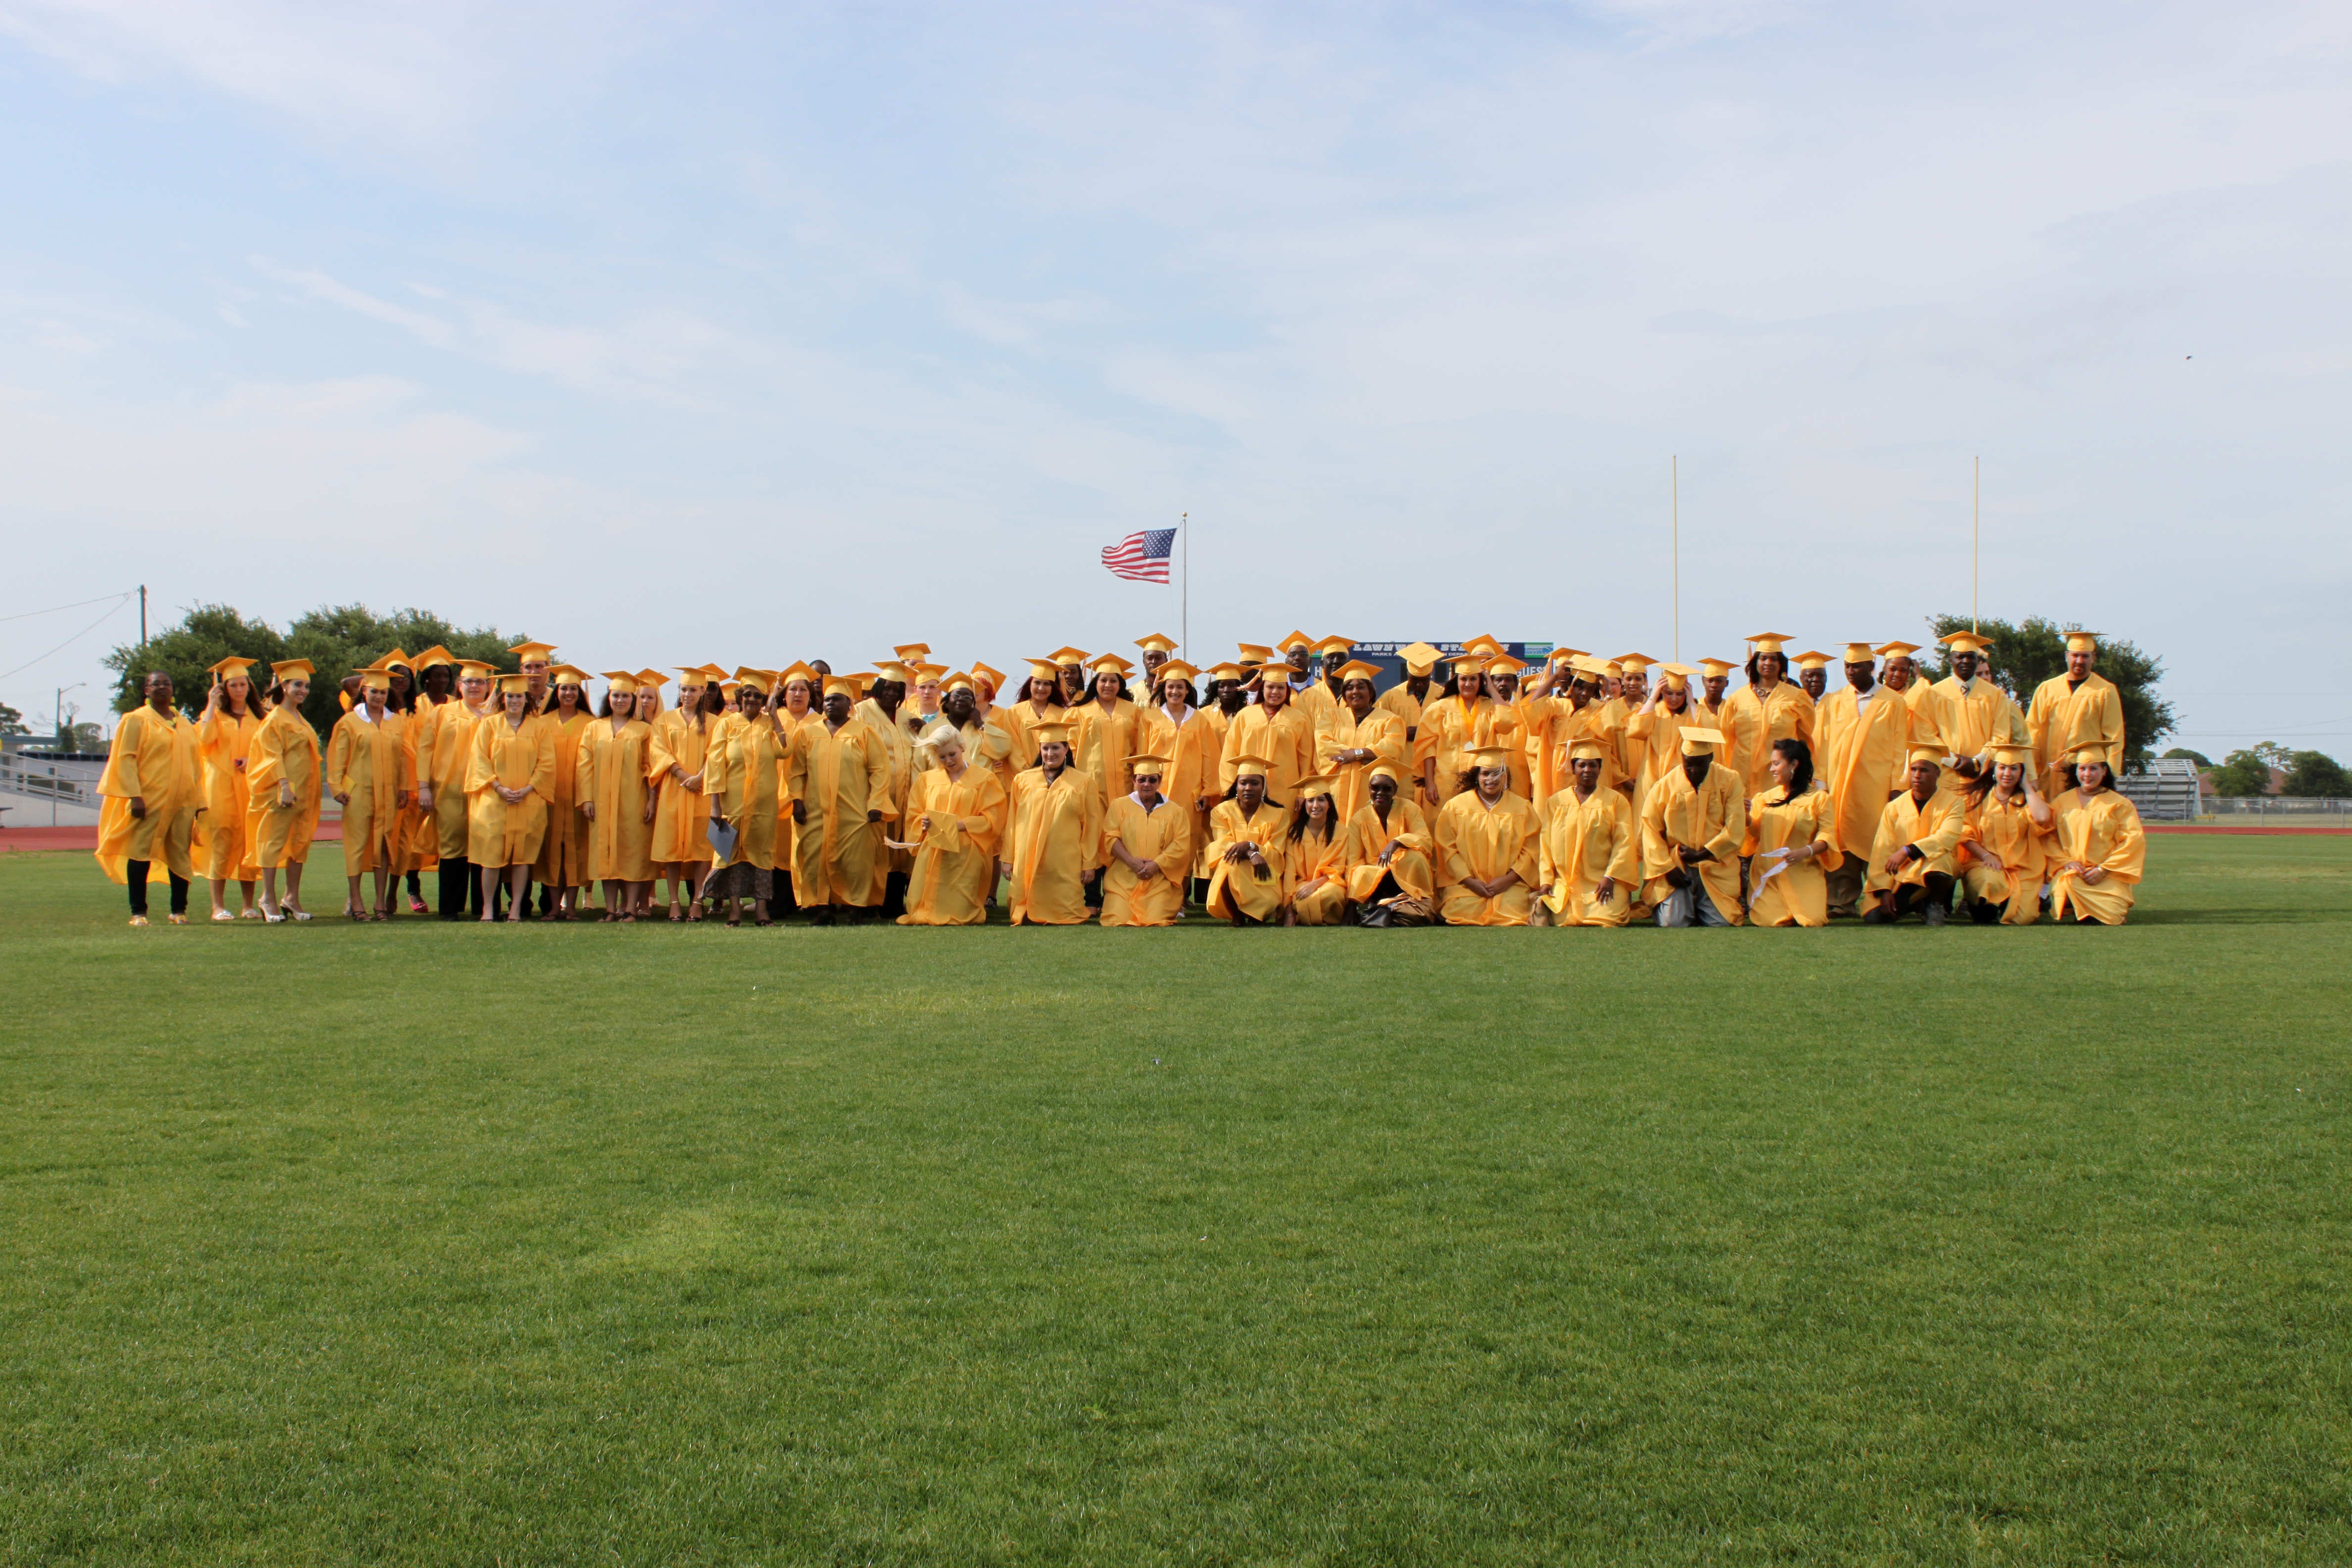 2010-2011 Graduating Class at the 2011 Graduation Ceremony